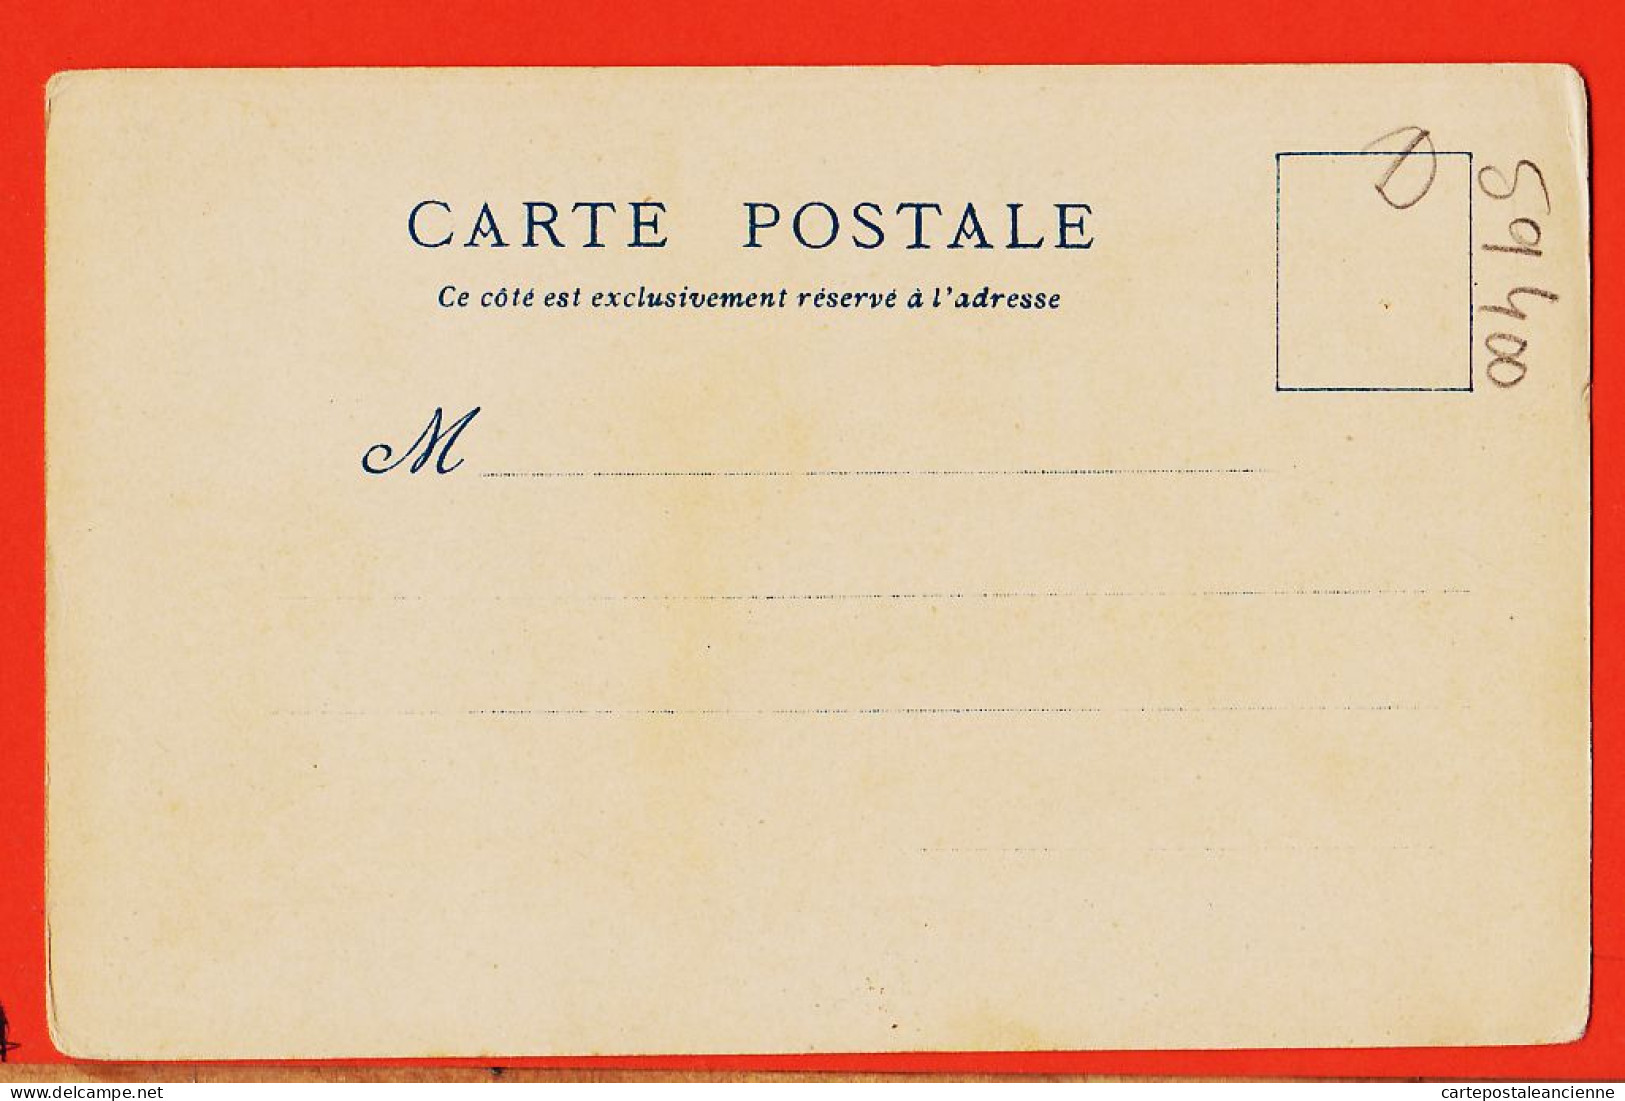 30803 / Le VIEUX PARIS Forteresse Le CHATELET  Illustration Albert ROBIDA 1900s - Robida